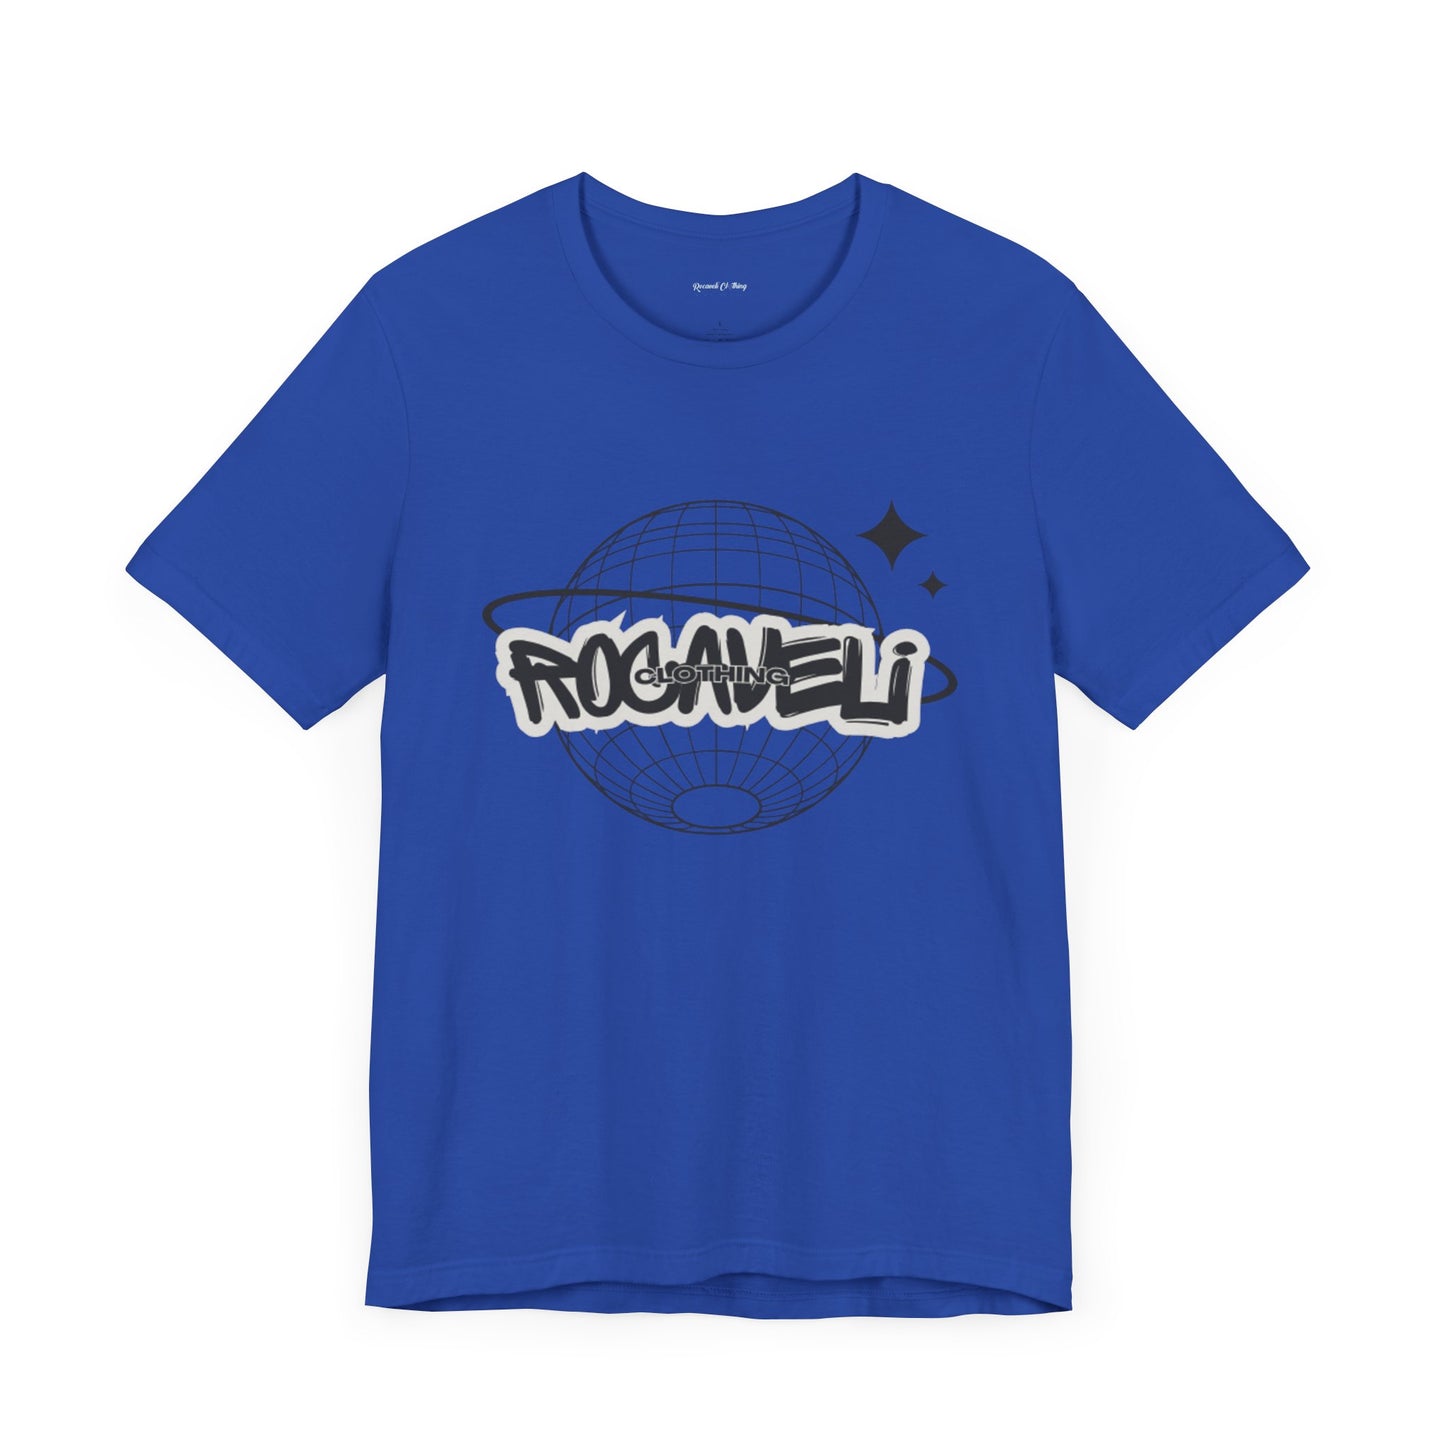 rocaveli clothing global edition Unisex Jersey Short Sleeve Tee